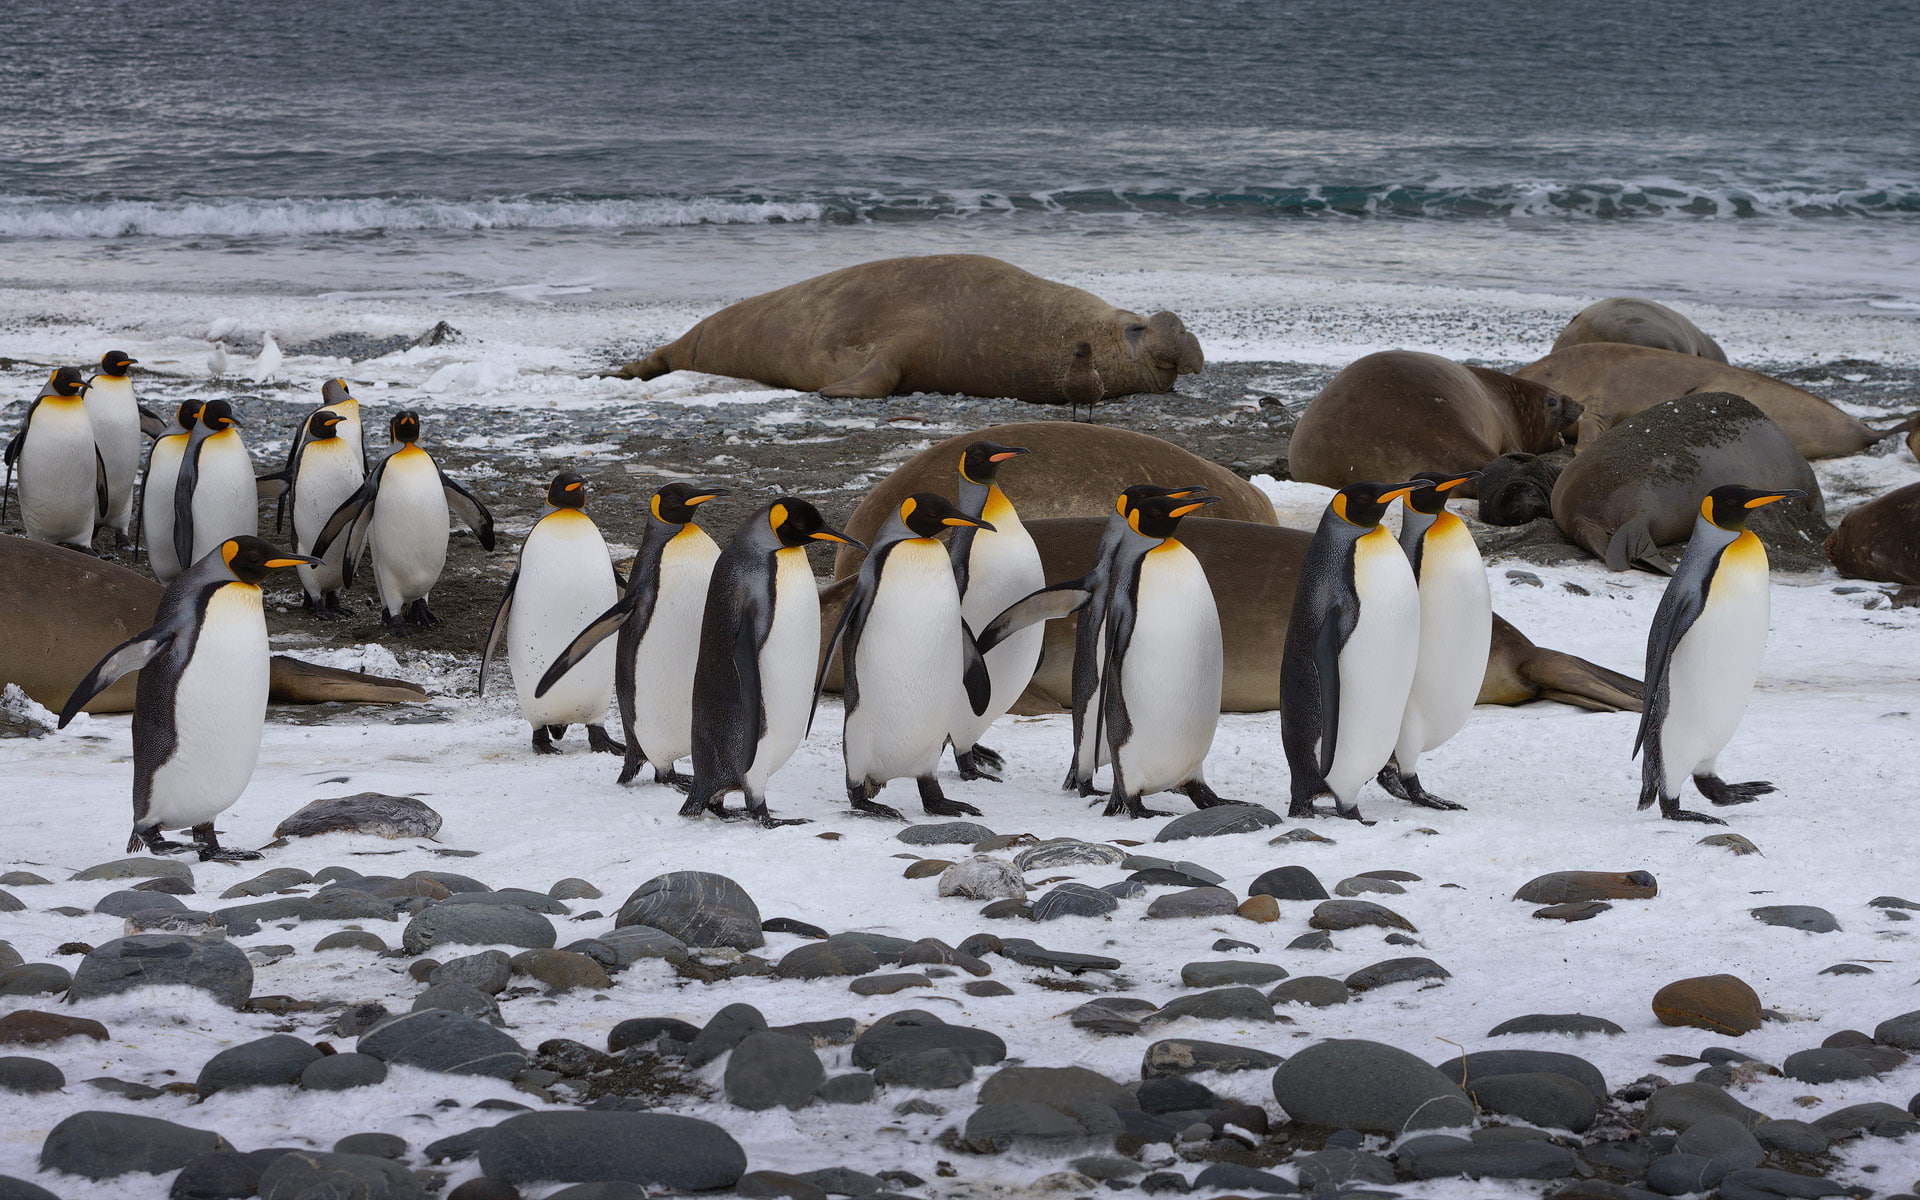 King Penguin Aptenodytes Patagonicus %d0%b2%d0%be %d0%b4%d1%80%d1%88%d1%82%d0%b2%d0%be %d1%81%d0%be Southern Elephant Seals Mirounga Leonina Desktop Wallpaper Hd 1920×1200